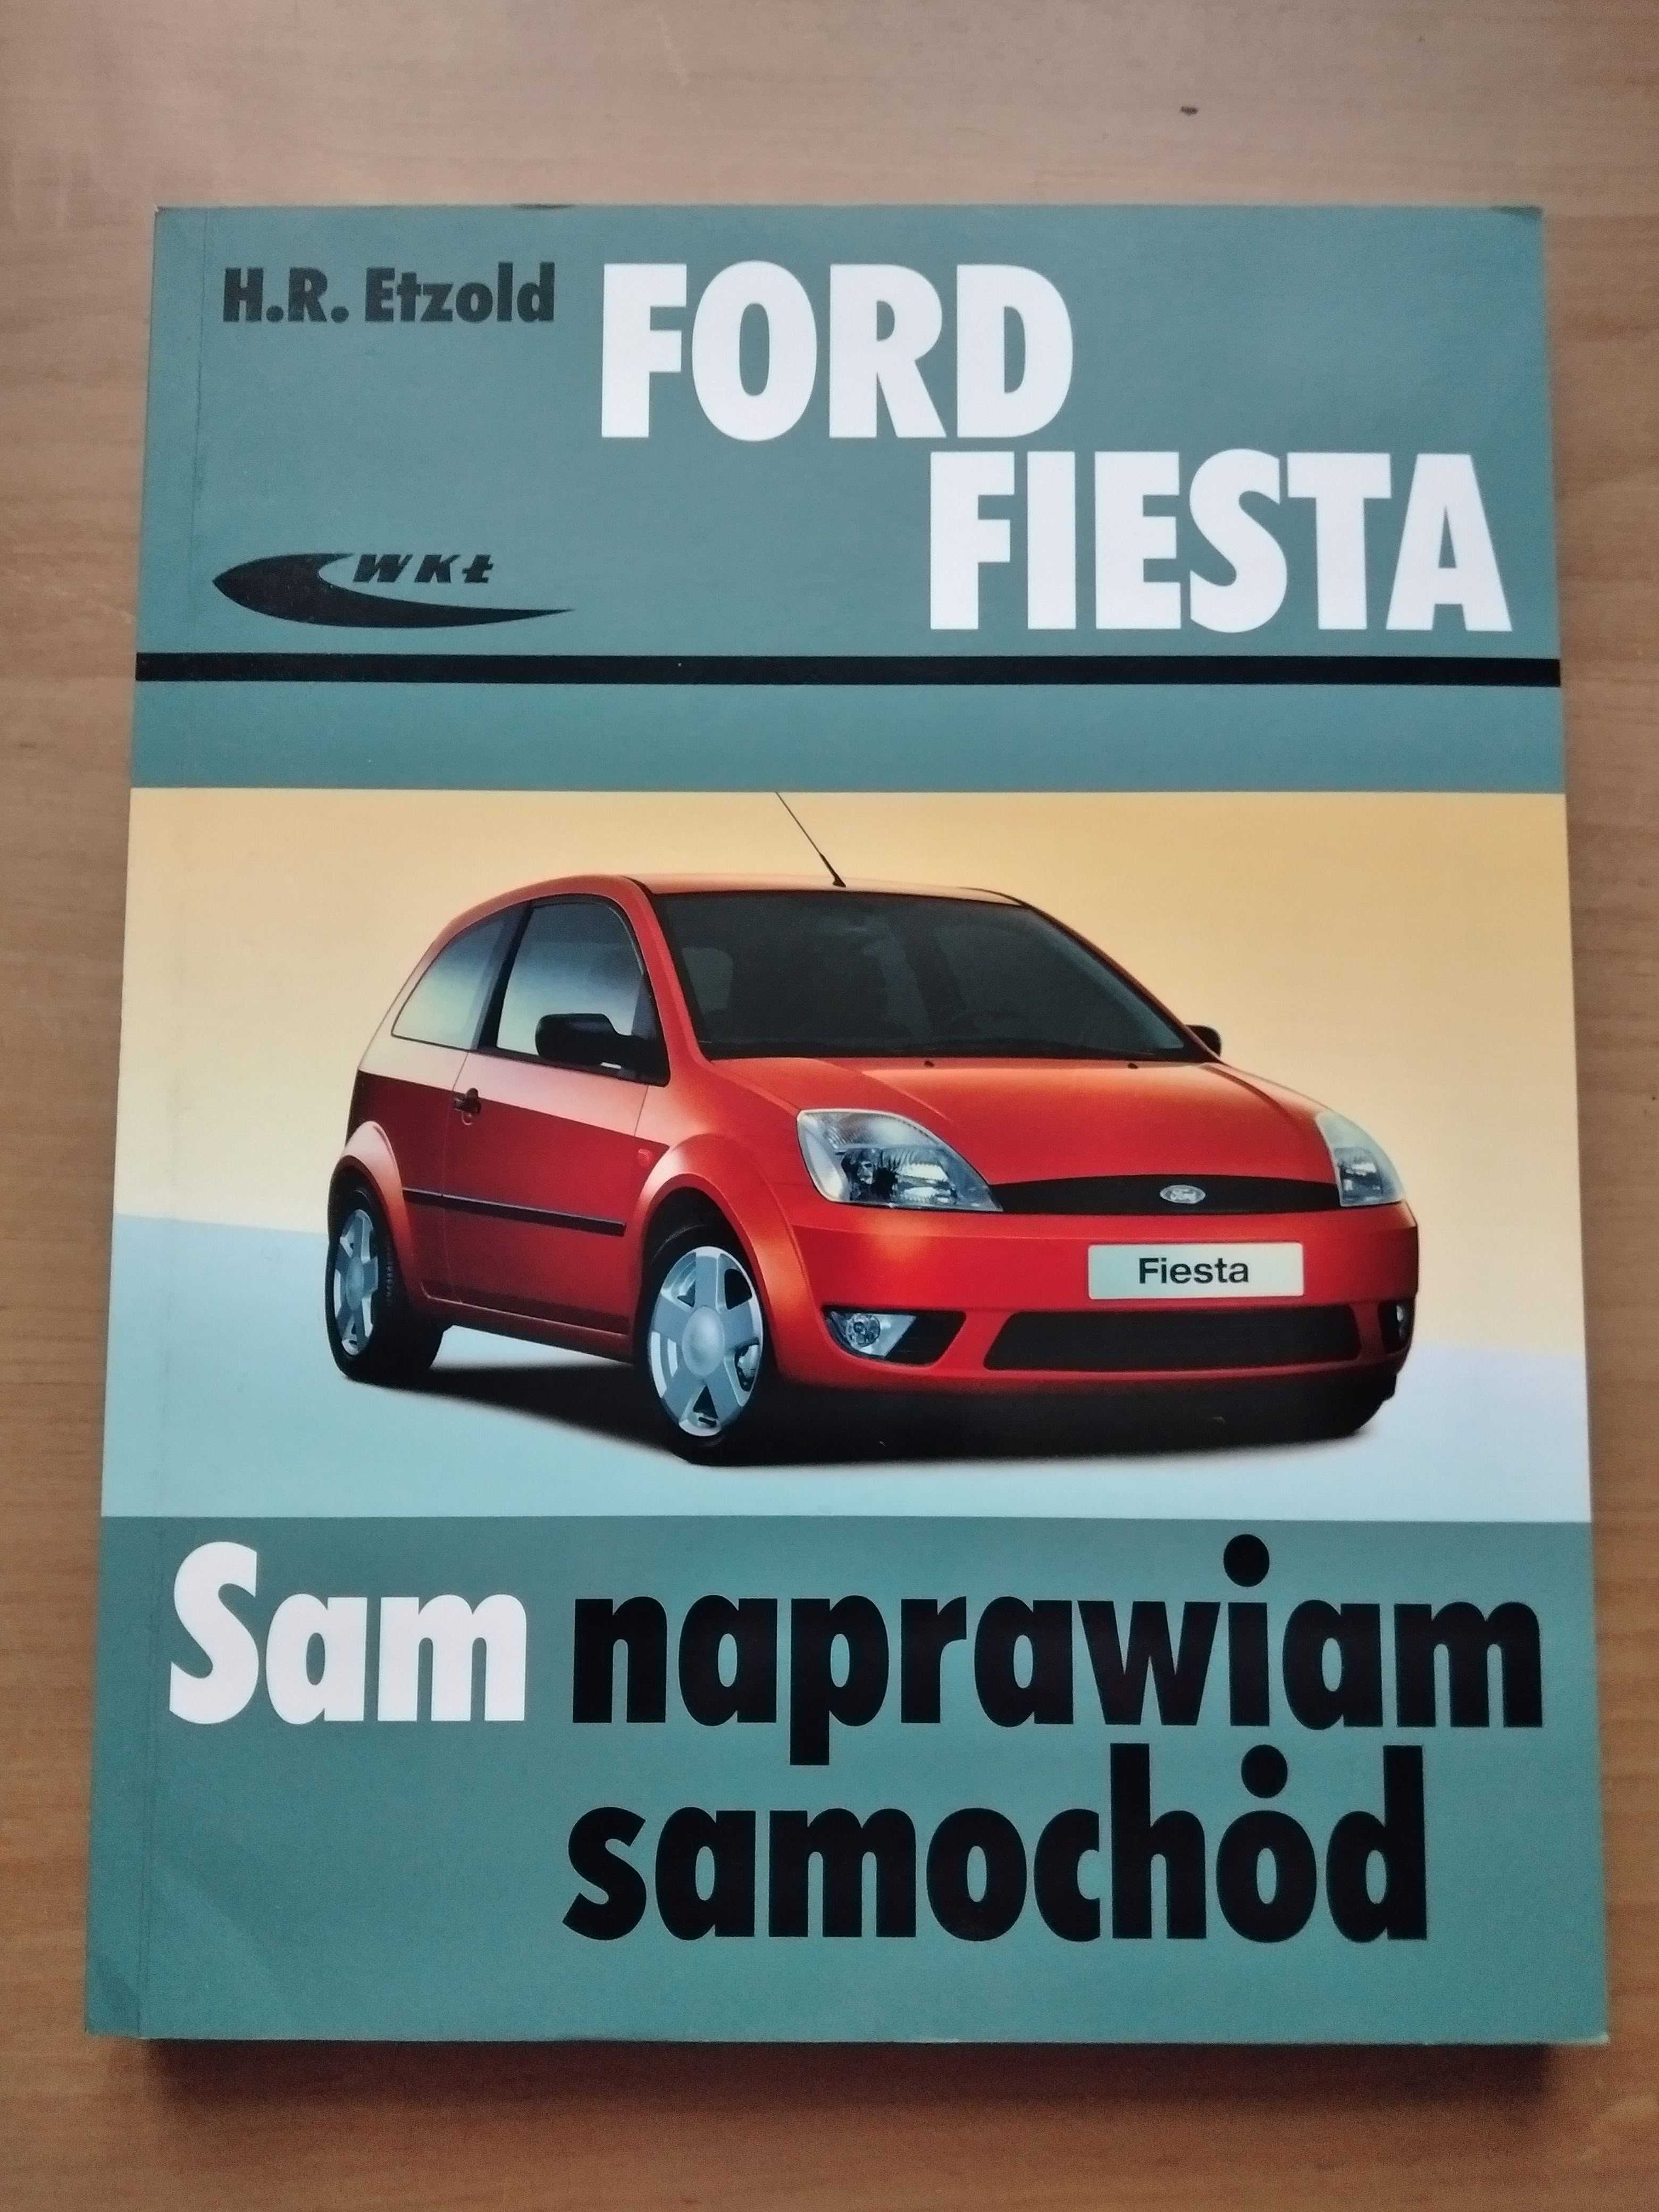 "Ford Fiesta - Sam naprawiam samochód" H. R. Etzold